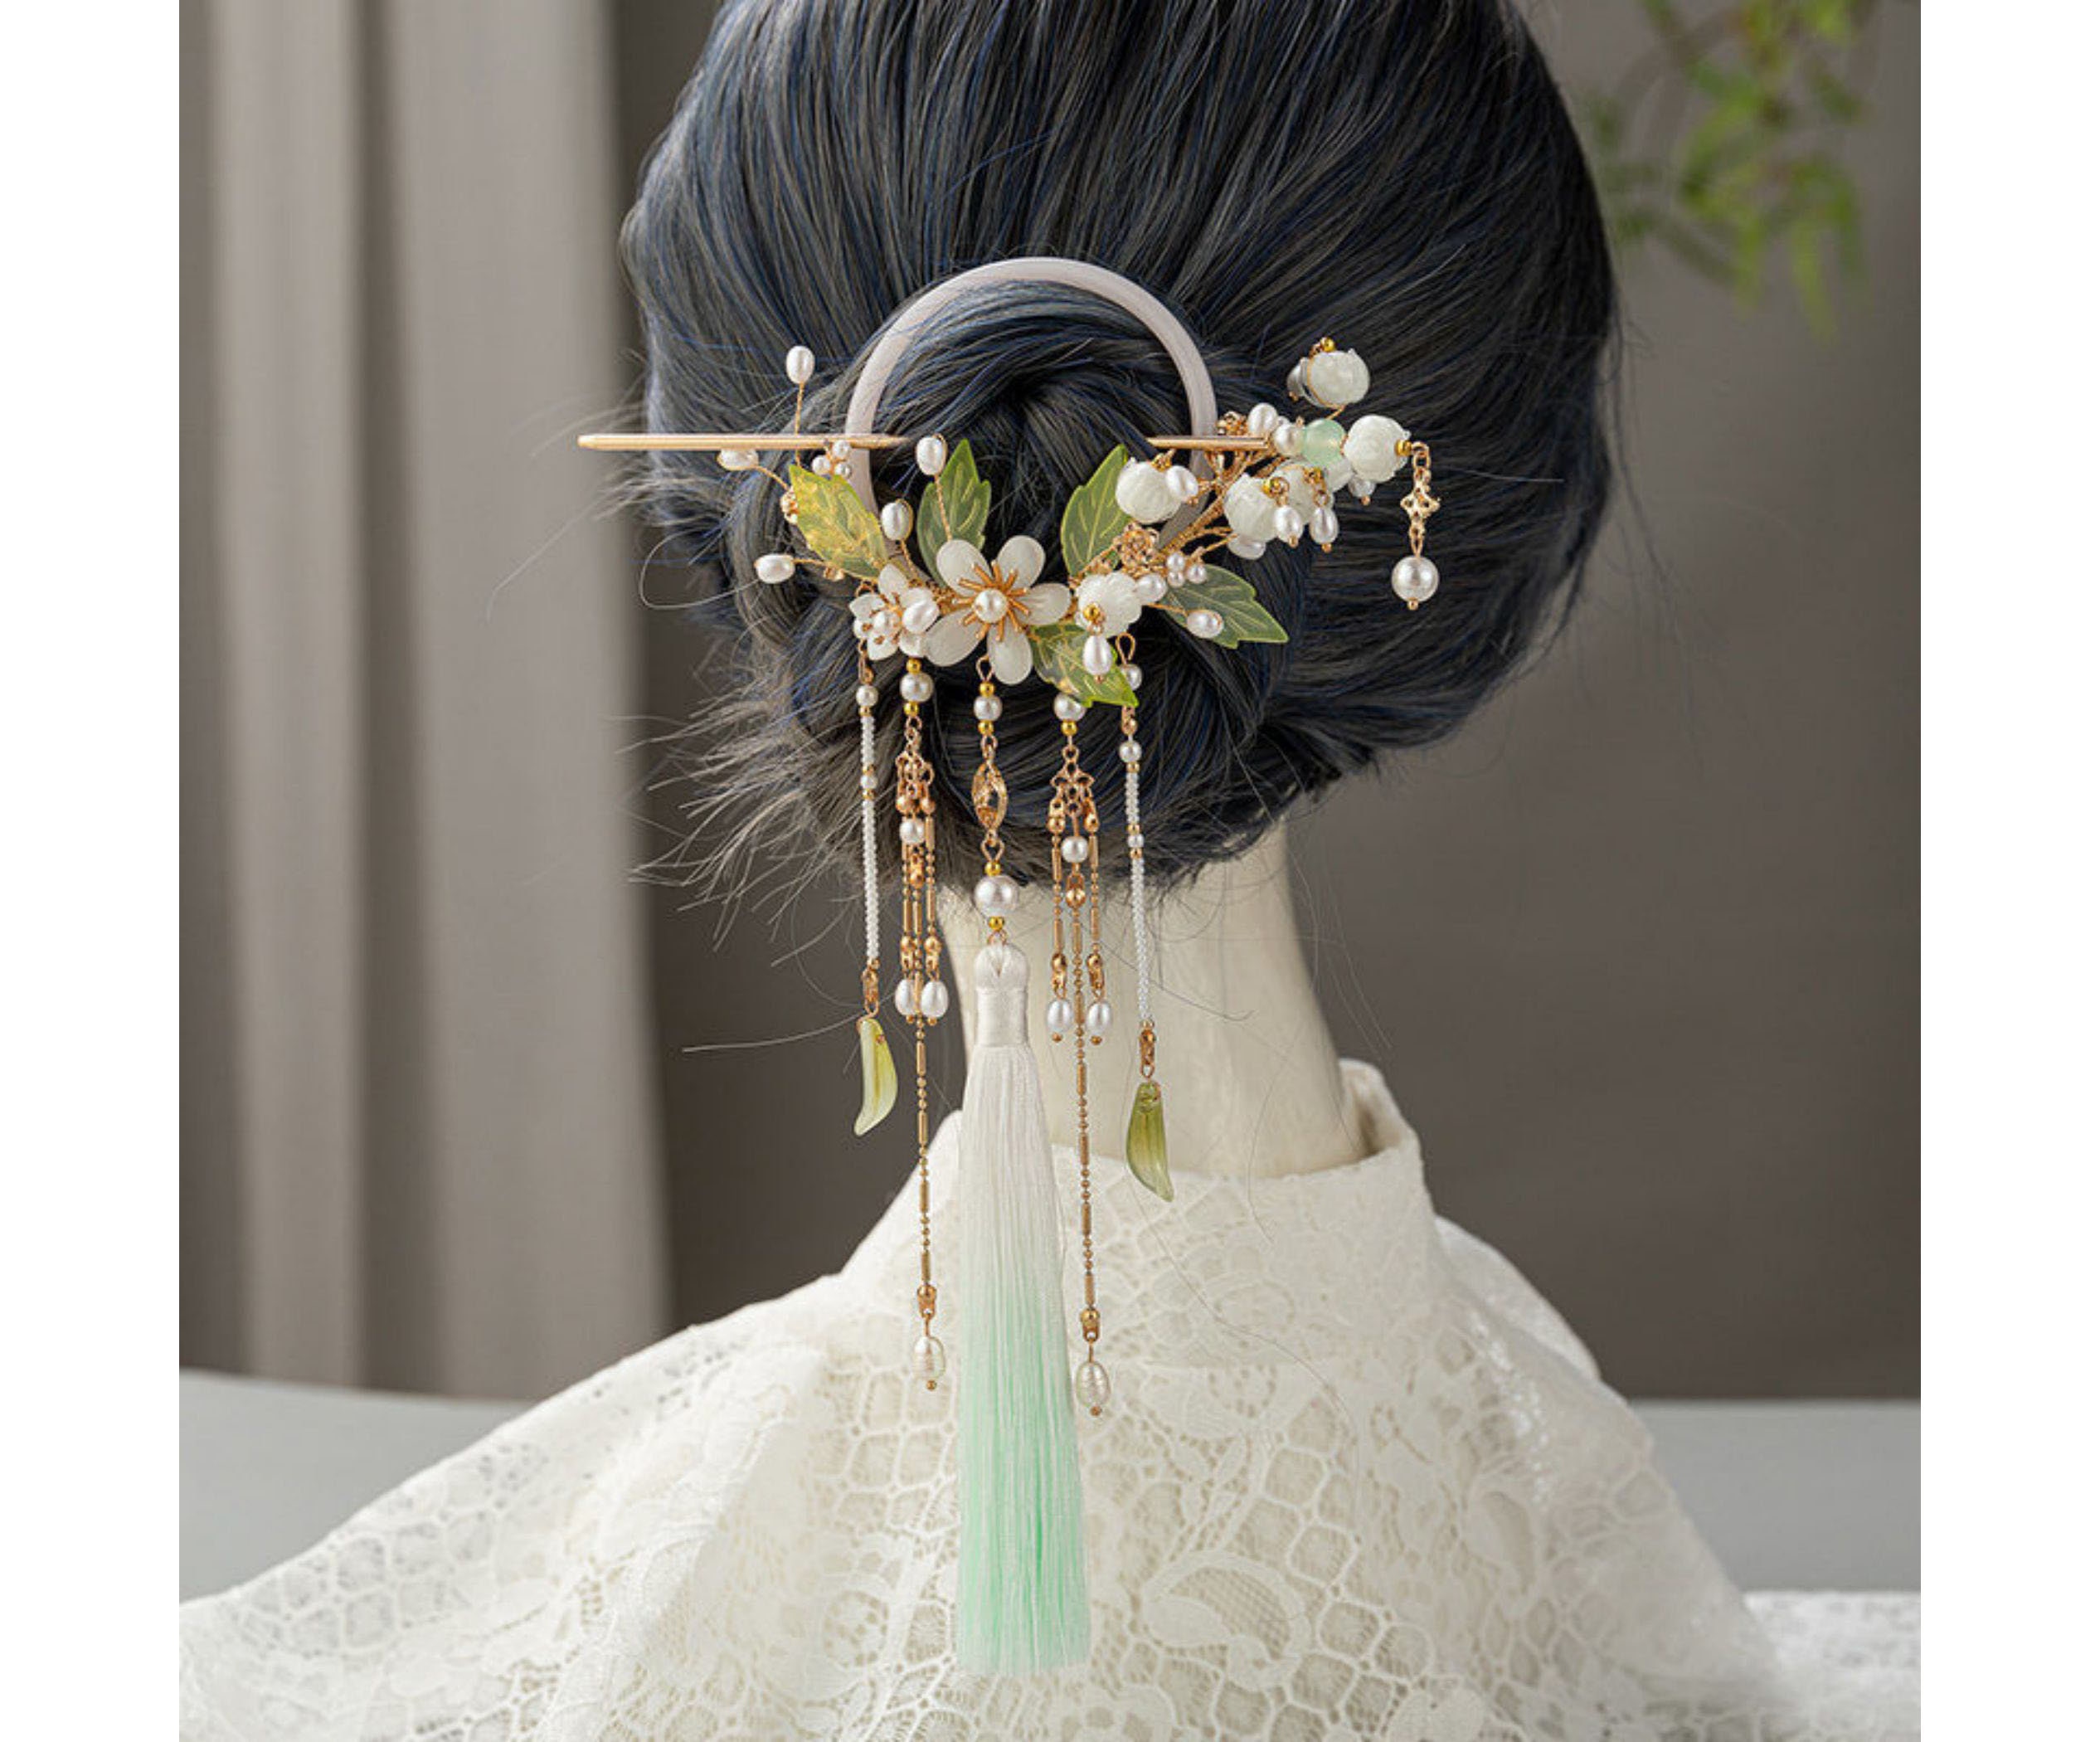 East Meets Dress Golden Snowflake Hair Pins | Chinese Wedding Hair Accessory